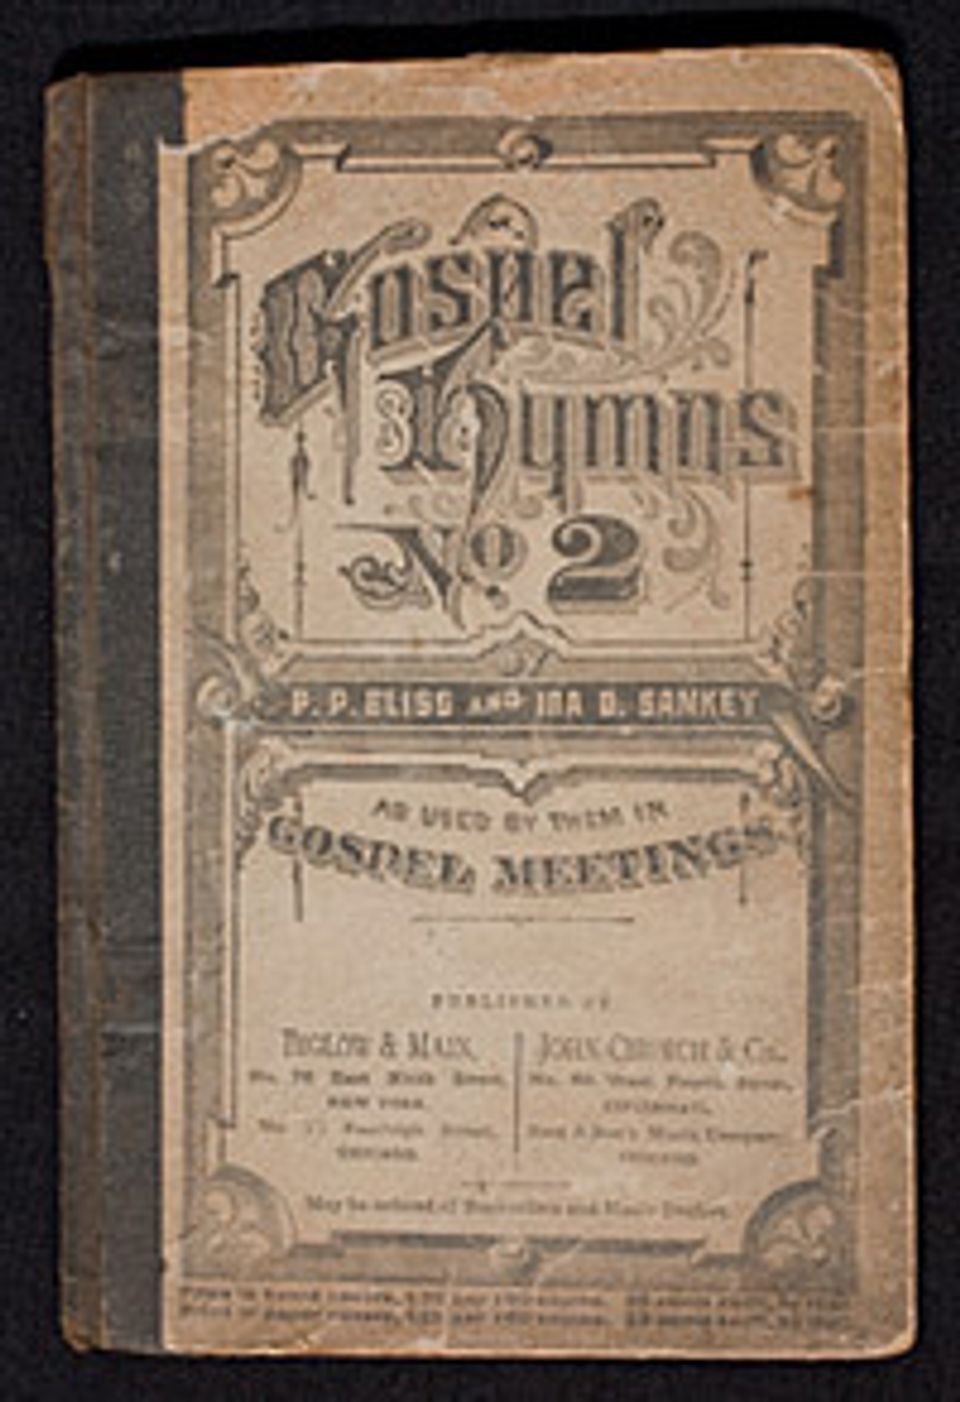 A photograph of a gospel hymnal 